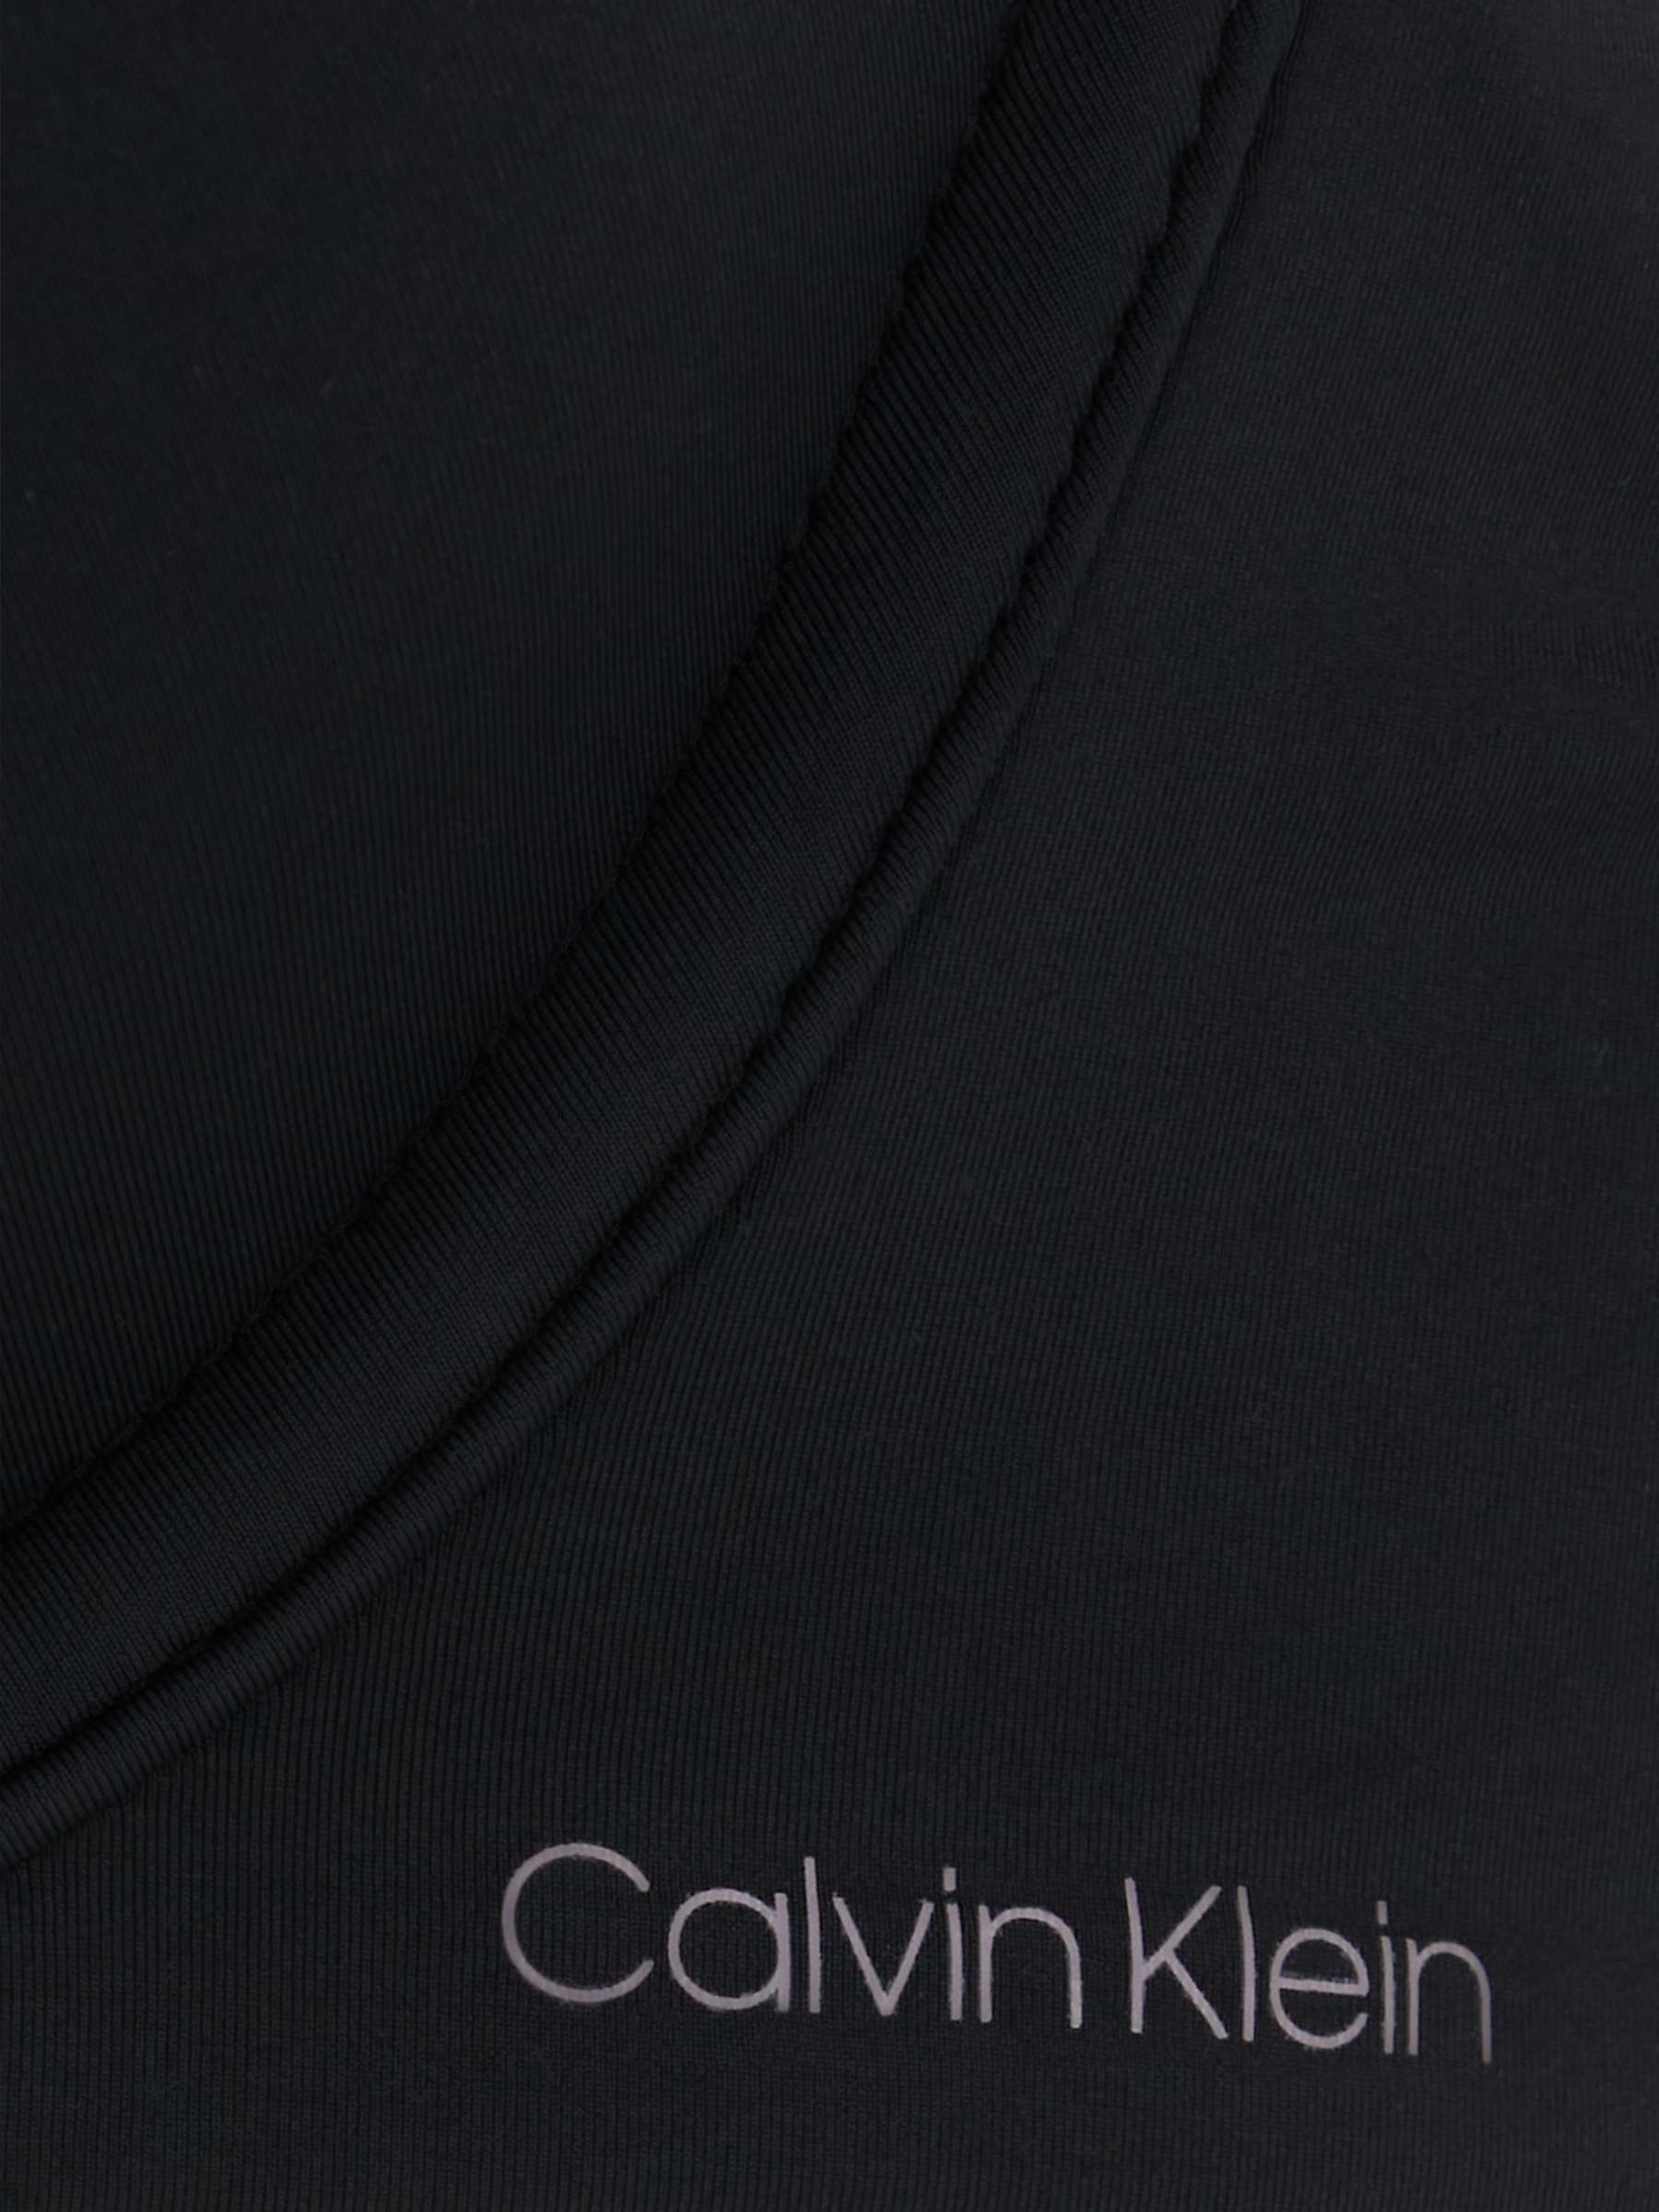 Buy Calvin Klein Infinite Flex T-Shirt Bra Online at johnlewis.com